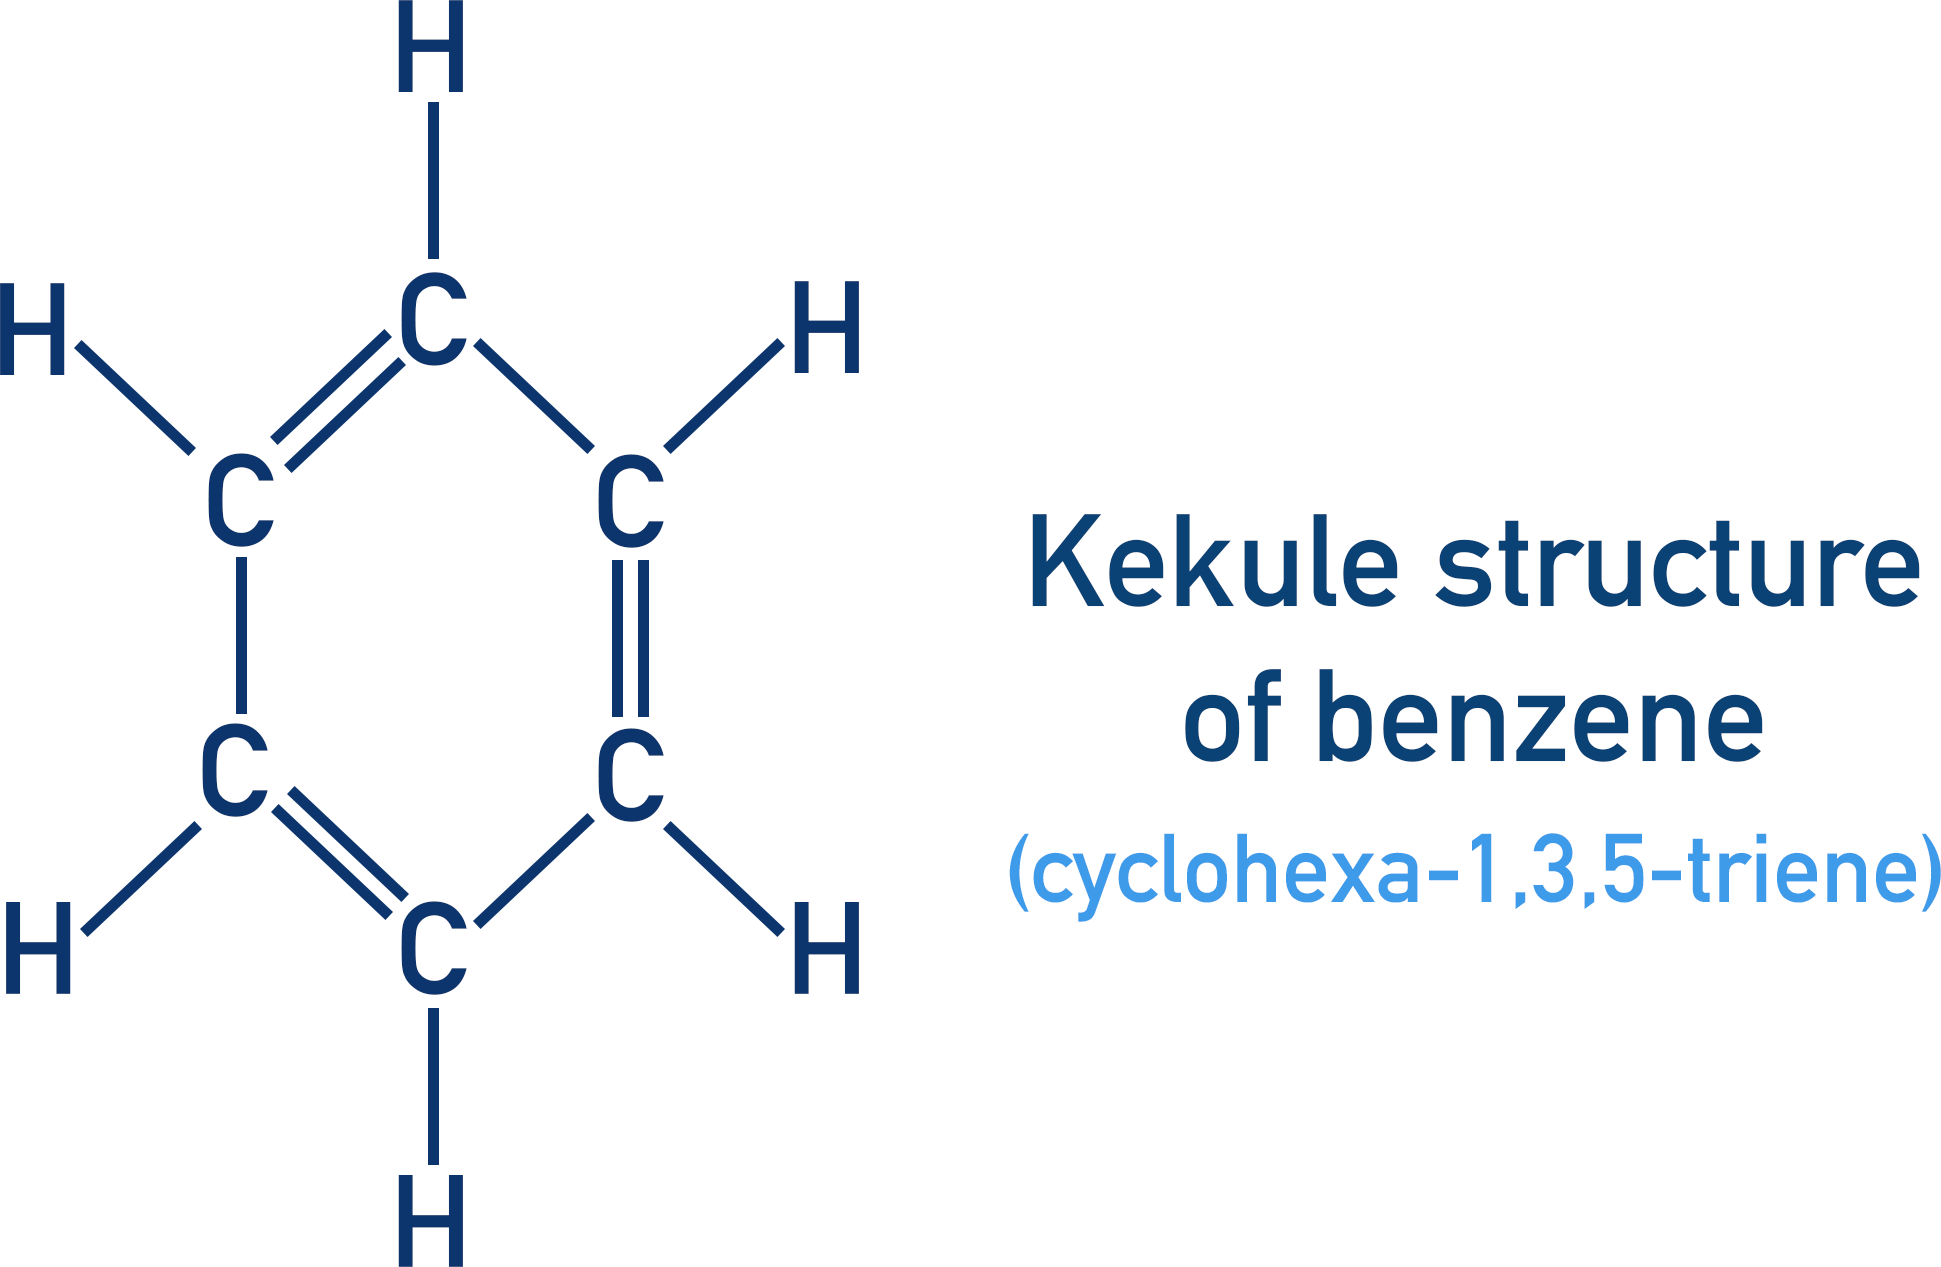 kekule structure of benzene cyclohexa-1,3,5-triene